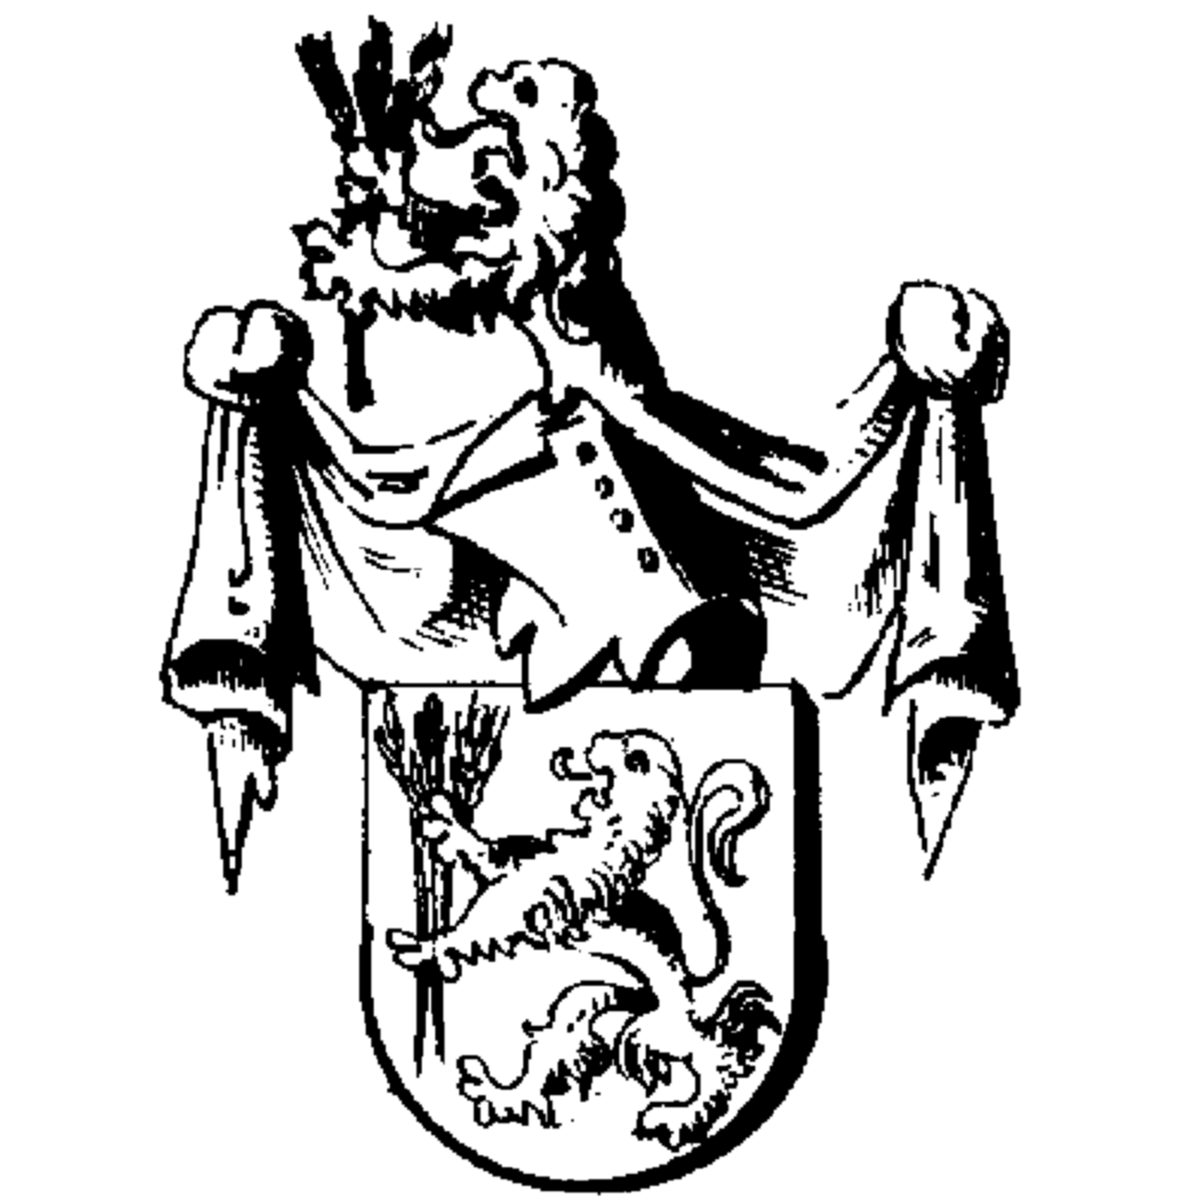 Wappen der Familie Albin